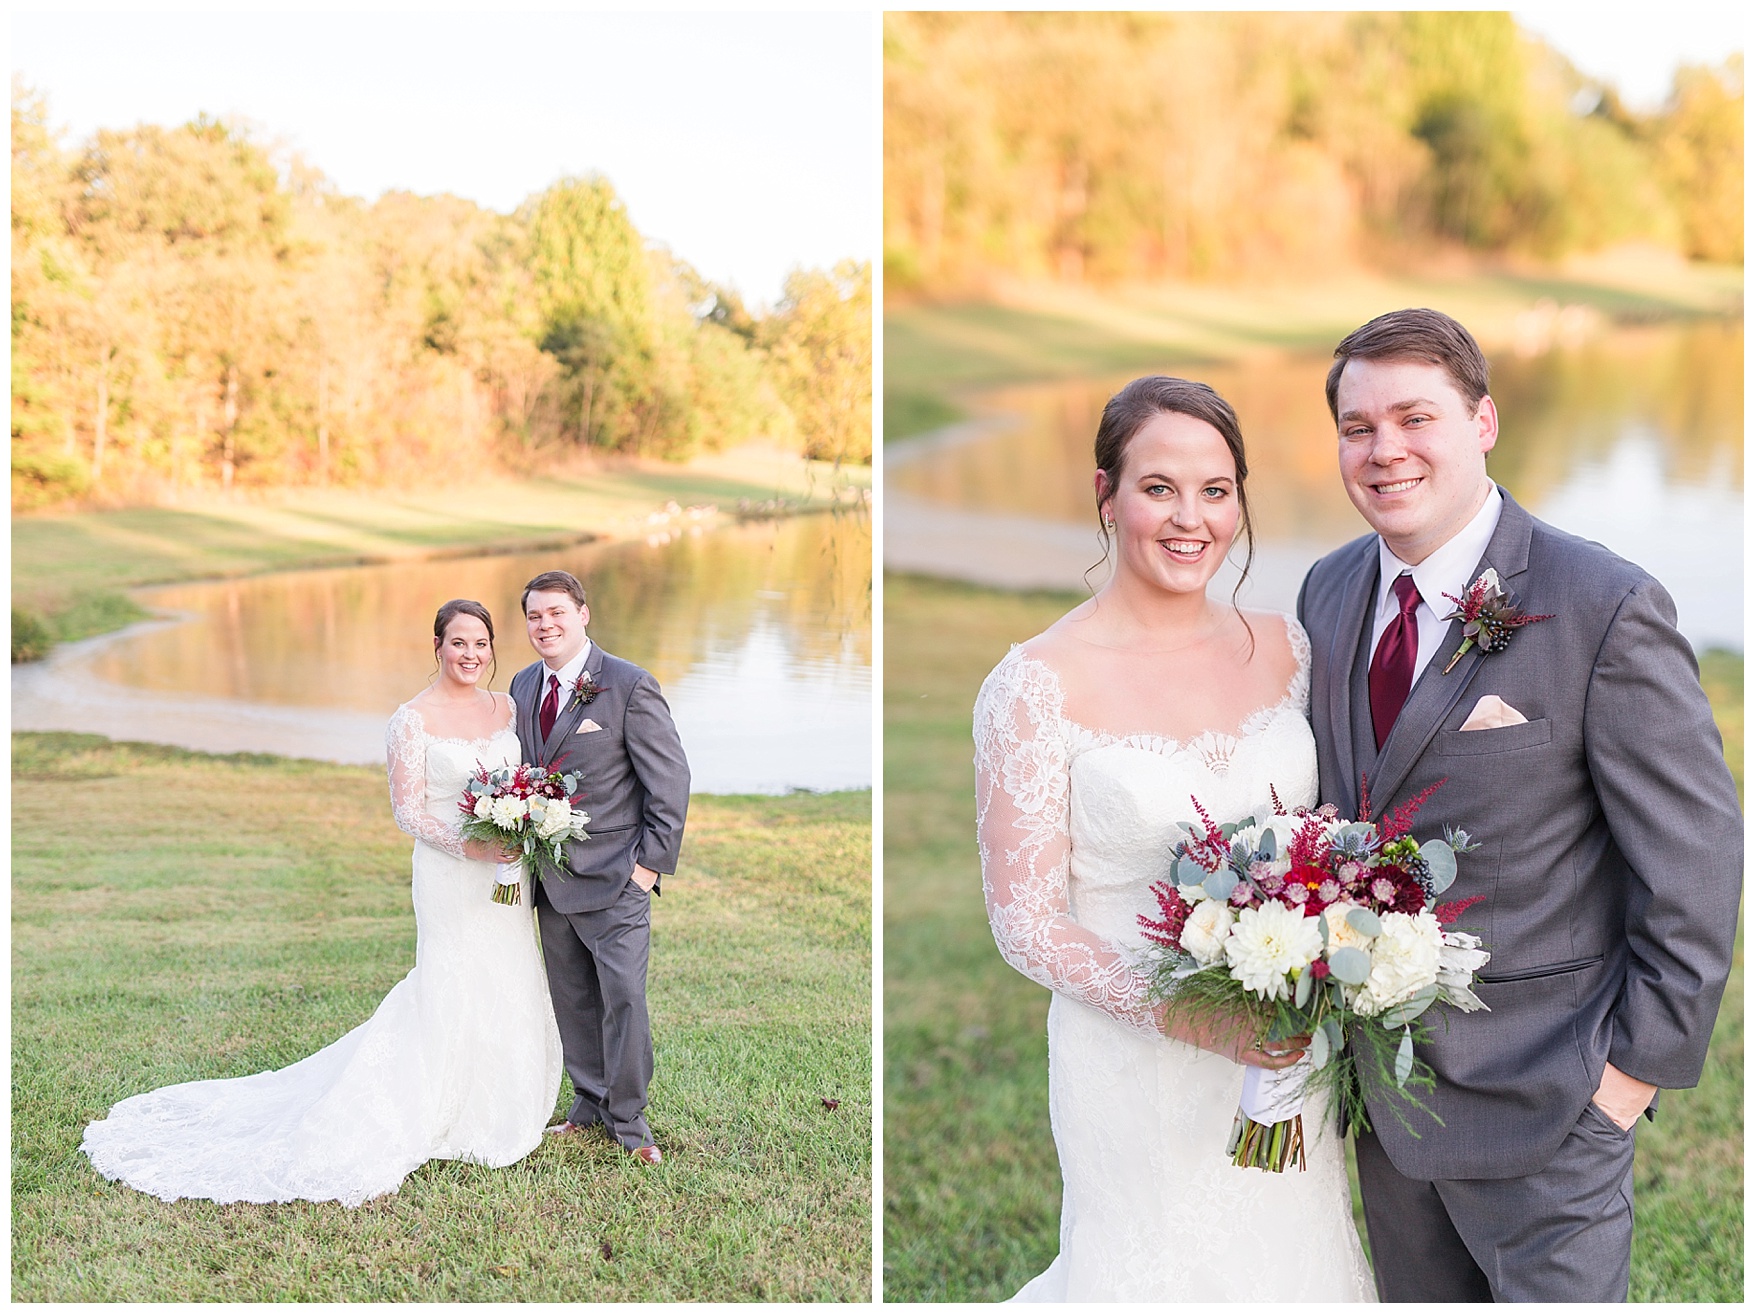 Charlottesville and Lynchburg Wedding Photographer || Fall Trivium Estate Wedding || Ashley Eiban Photography || www.ashleyeiban.com